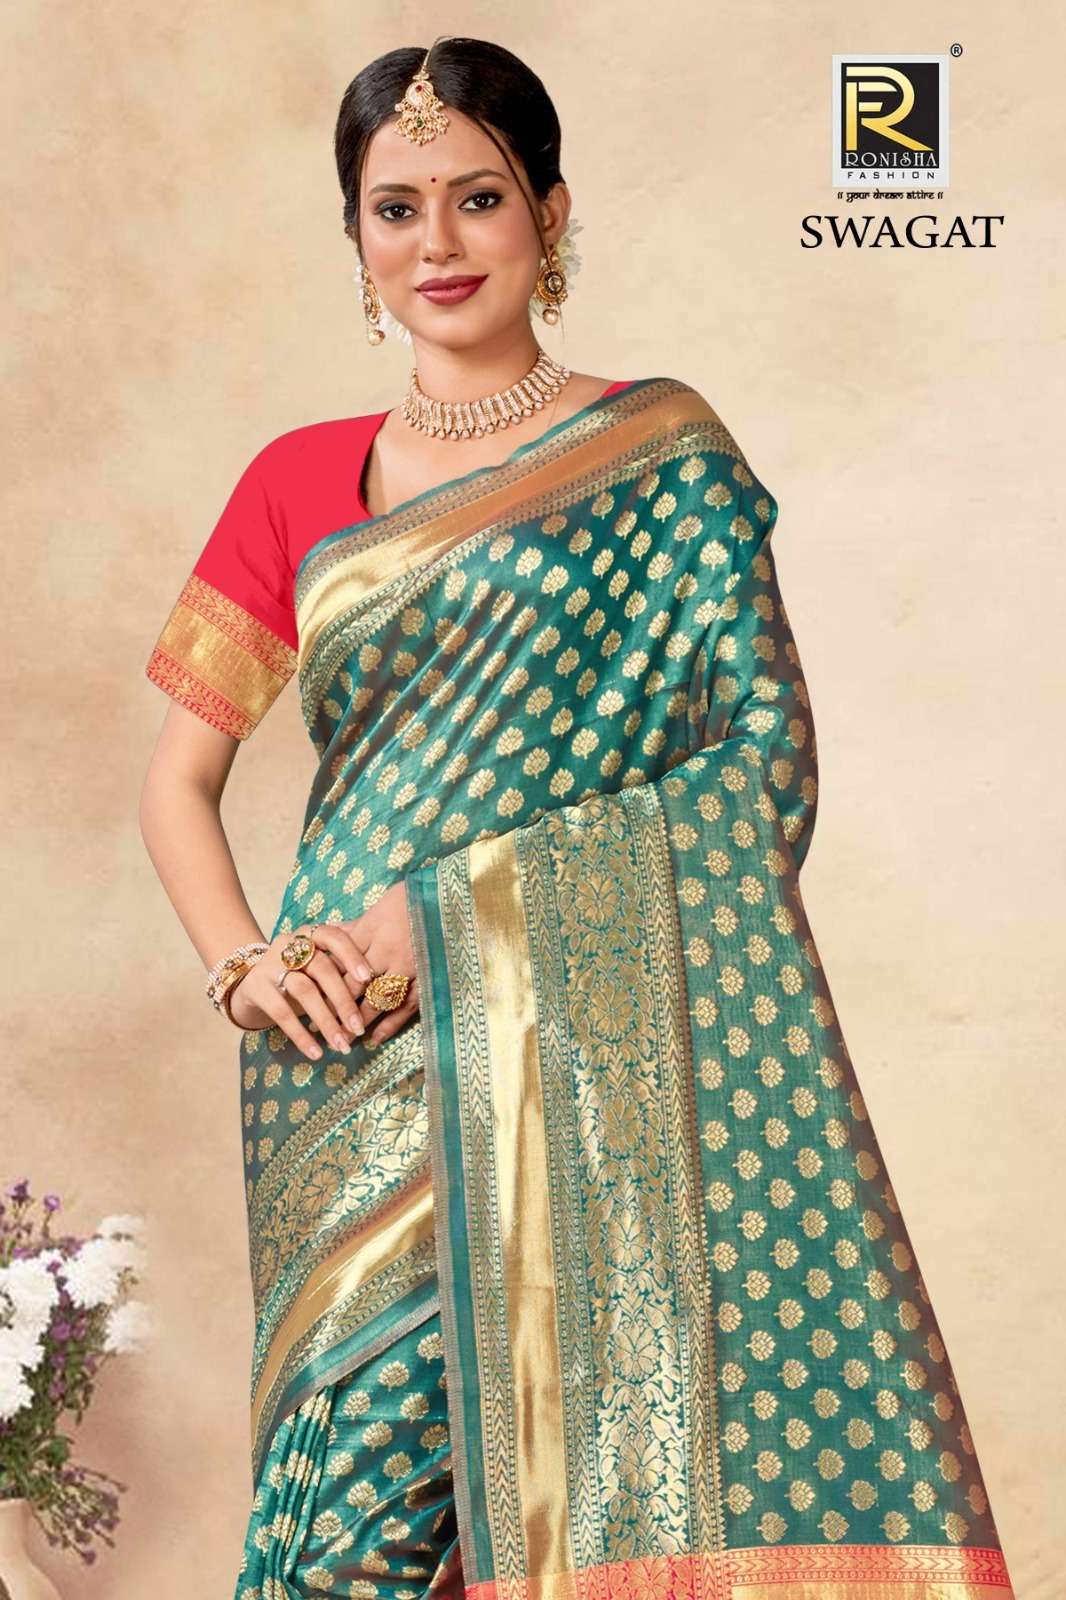 Ronisha Swagat Banarasi Silk Saree Wholesale catalog